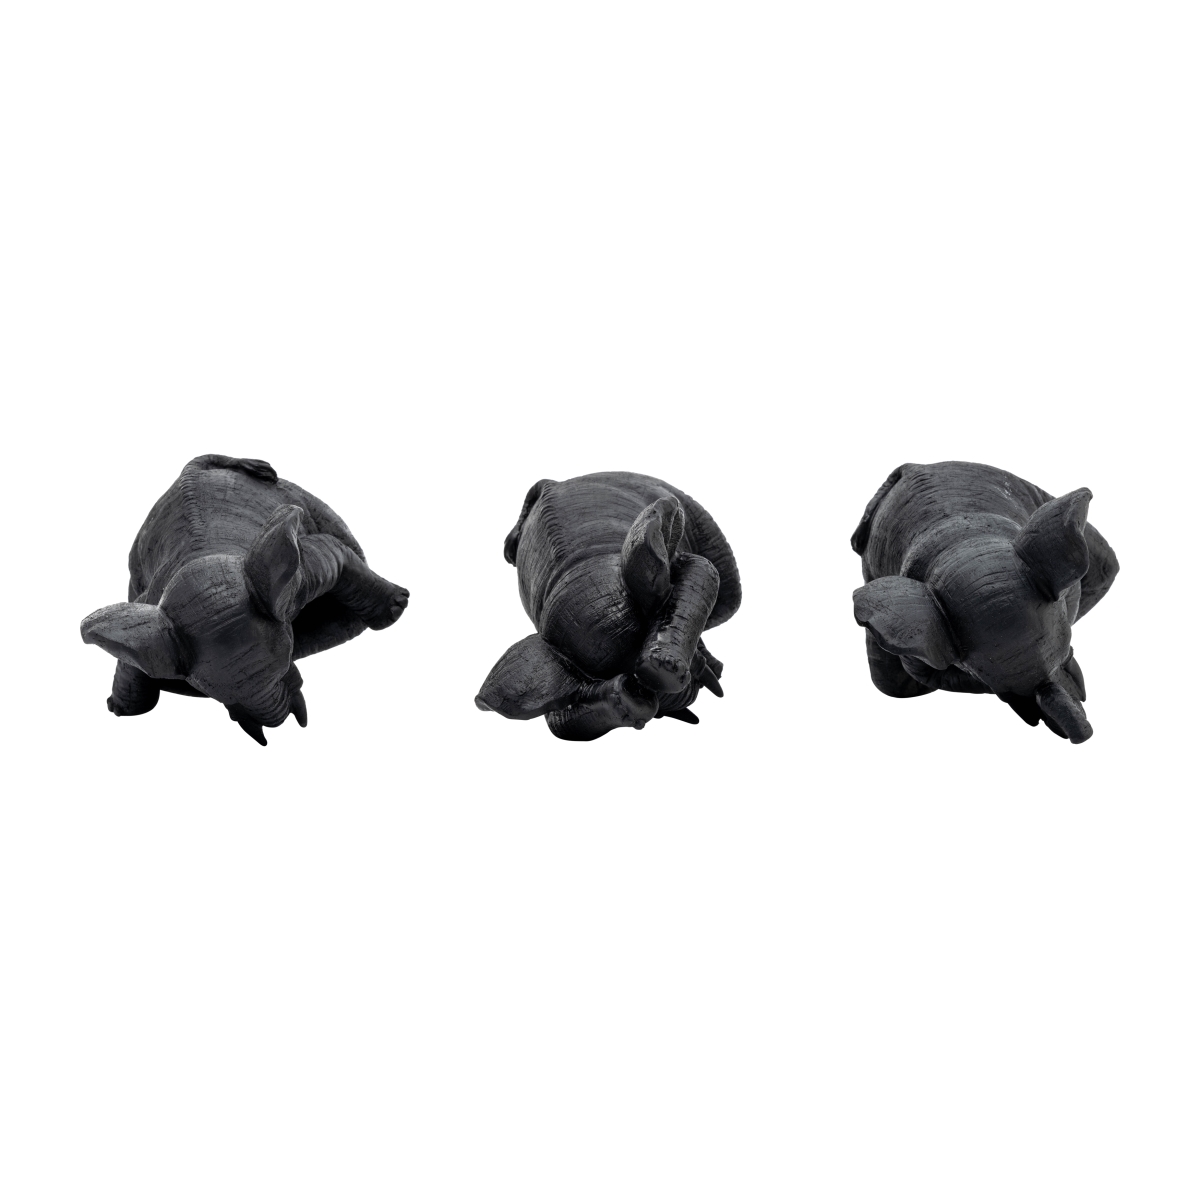 Picture of Sagebrook Home 17103-03 8 in. Resin Yoga Elephants Figurine, Black - Set of 3